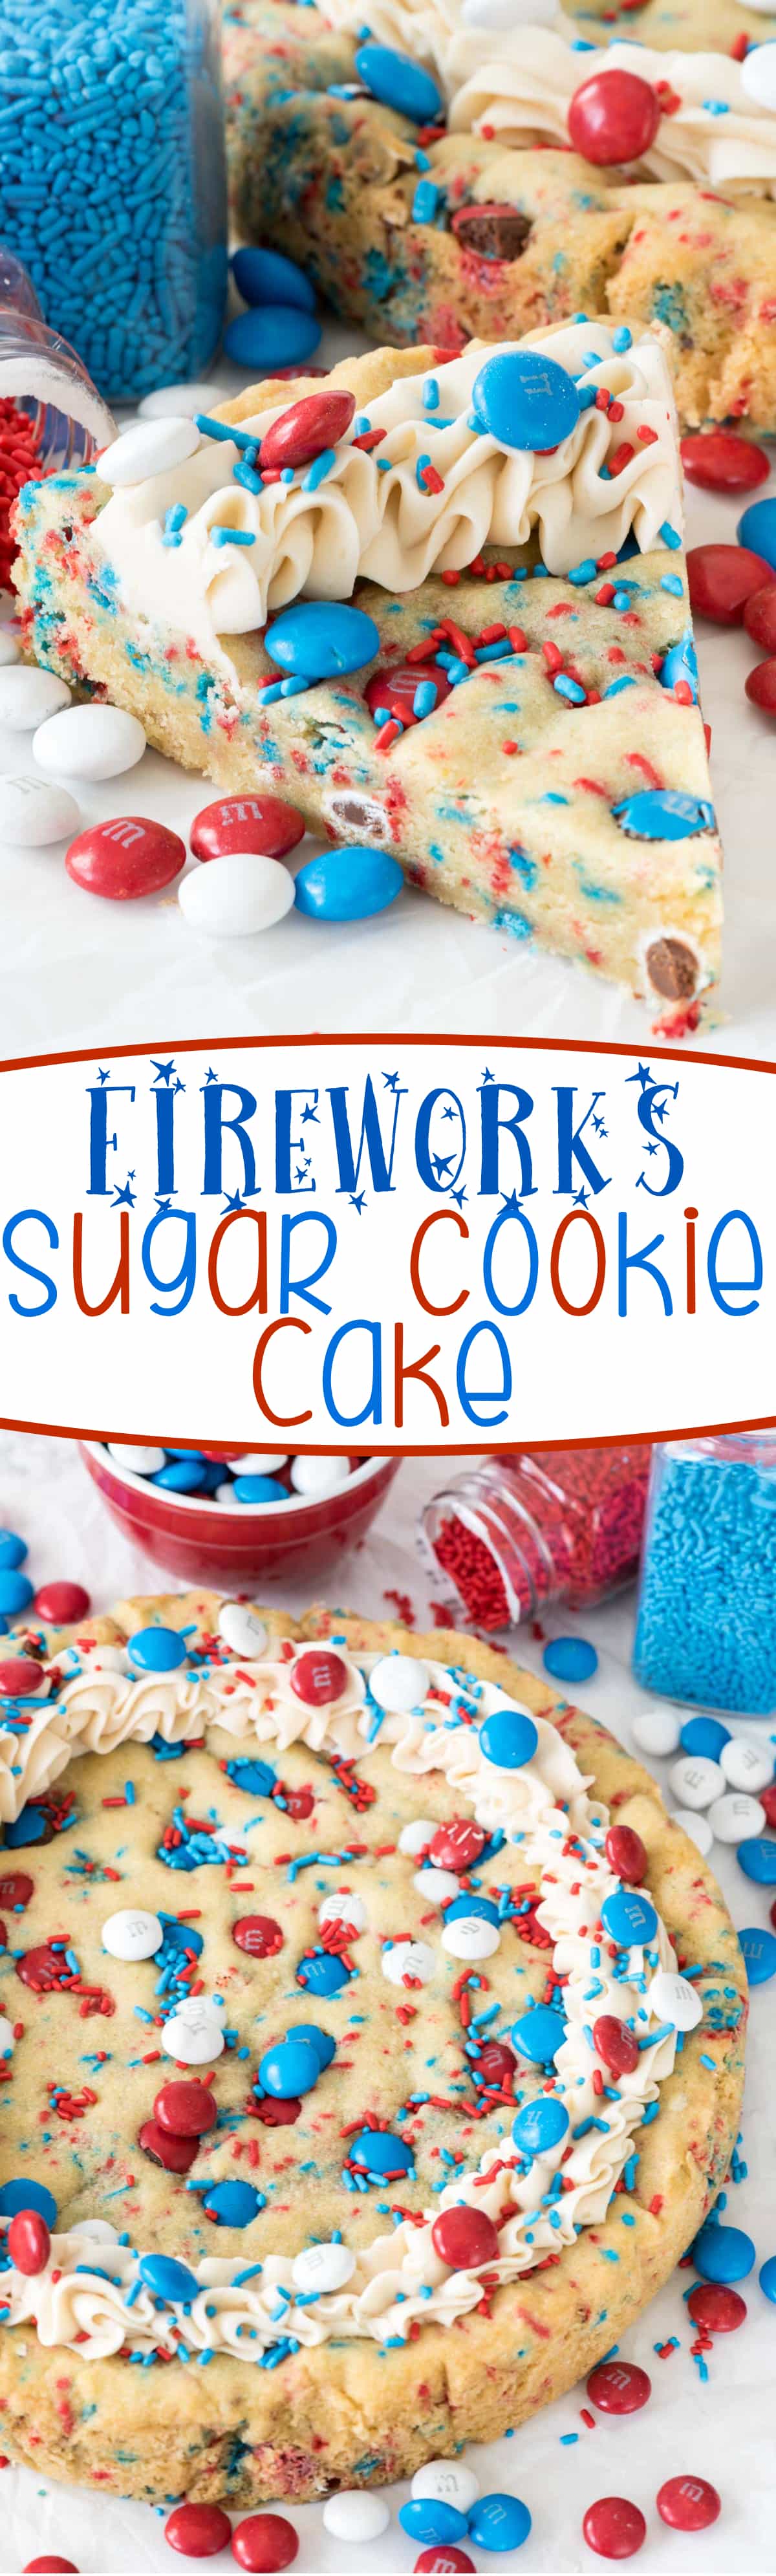 https://www.crazyforcrust.com/wp-content/uploads/2016/05/Fireworks-Sugar-Cookie-Cake.jpg